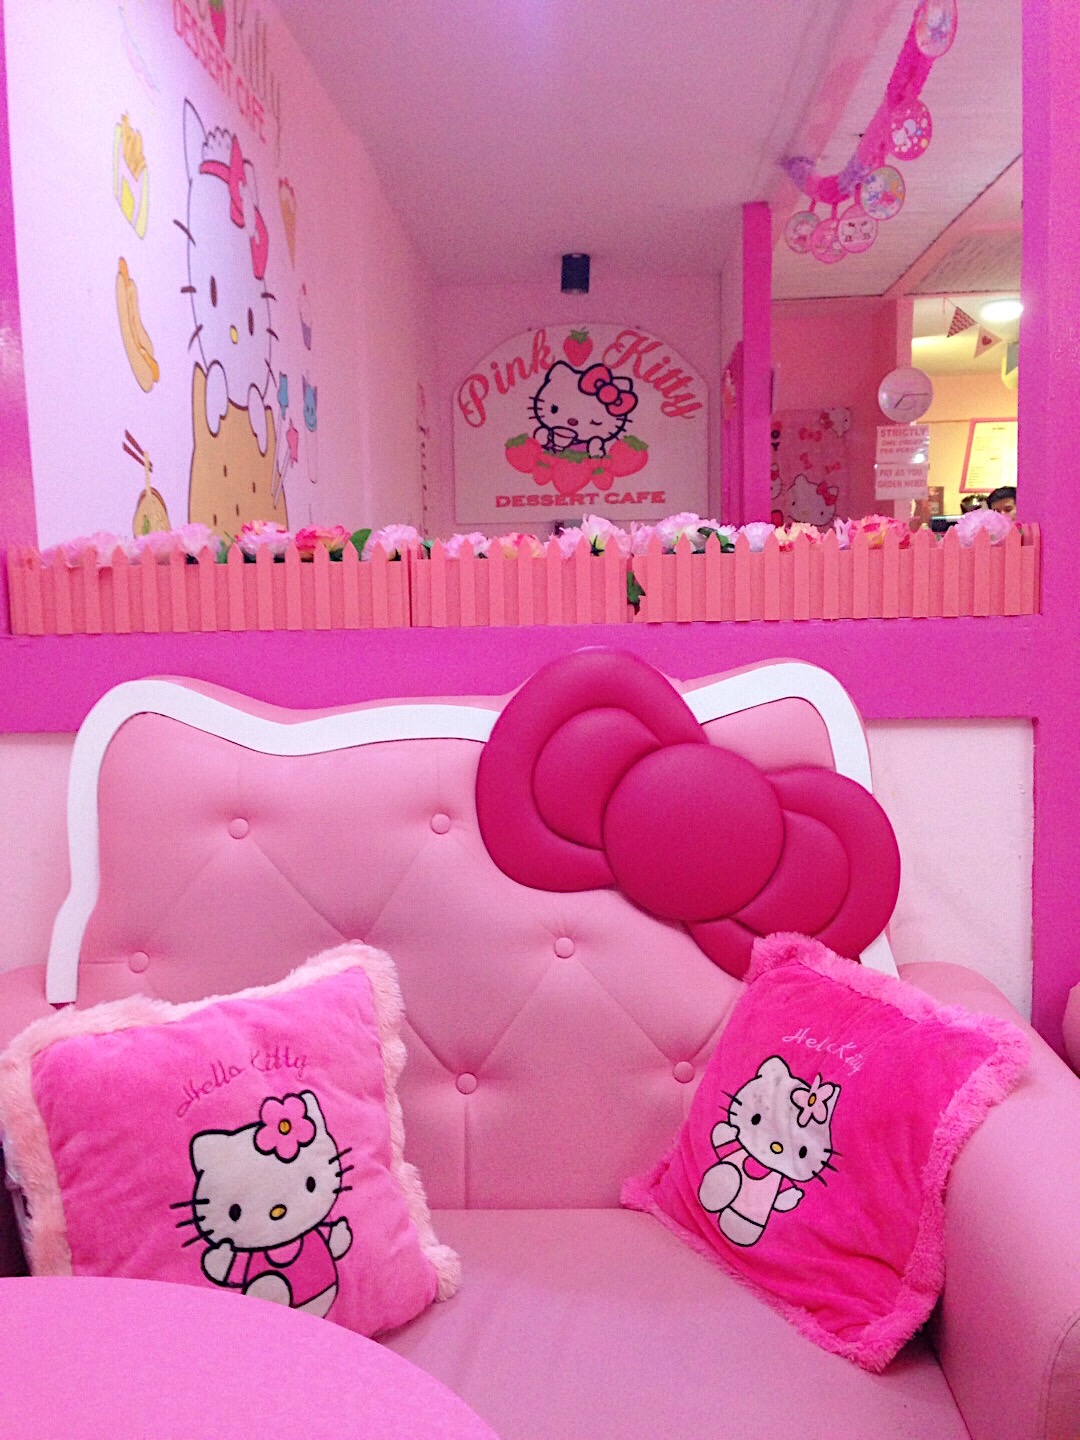 Pink Kitty Dessert Cafe – Hello Kitty in Cebu